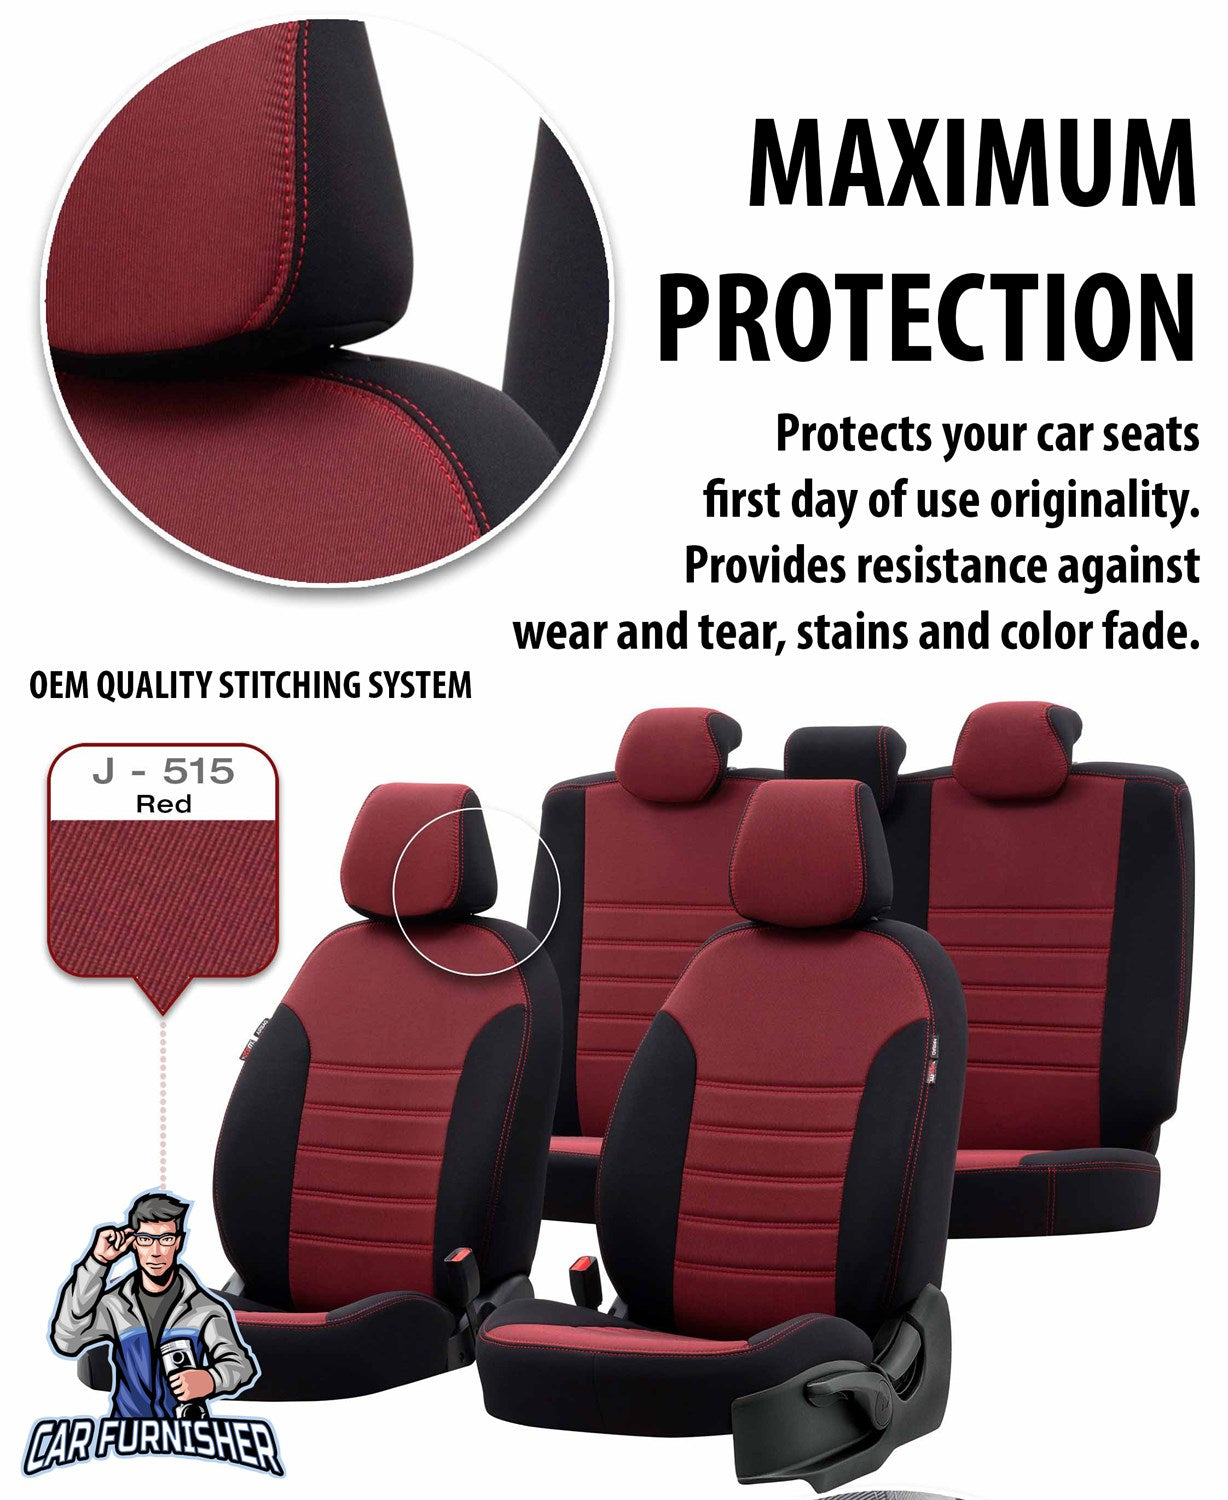 Citroen C-Elysee Seat Covers Original Jacquard Design Dark Beige Jacquard Fabric